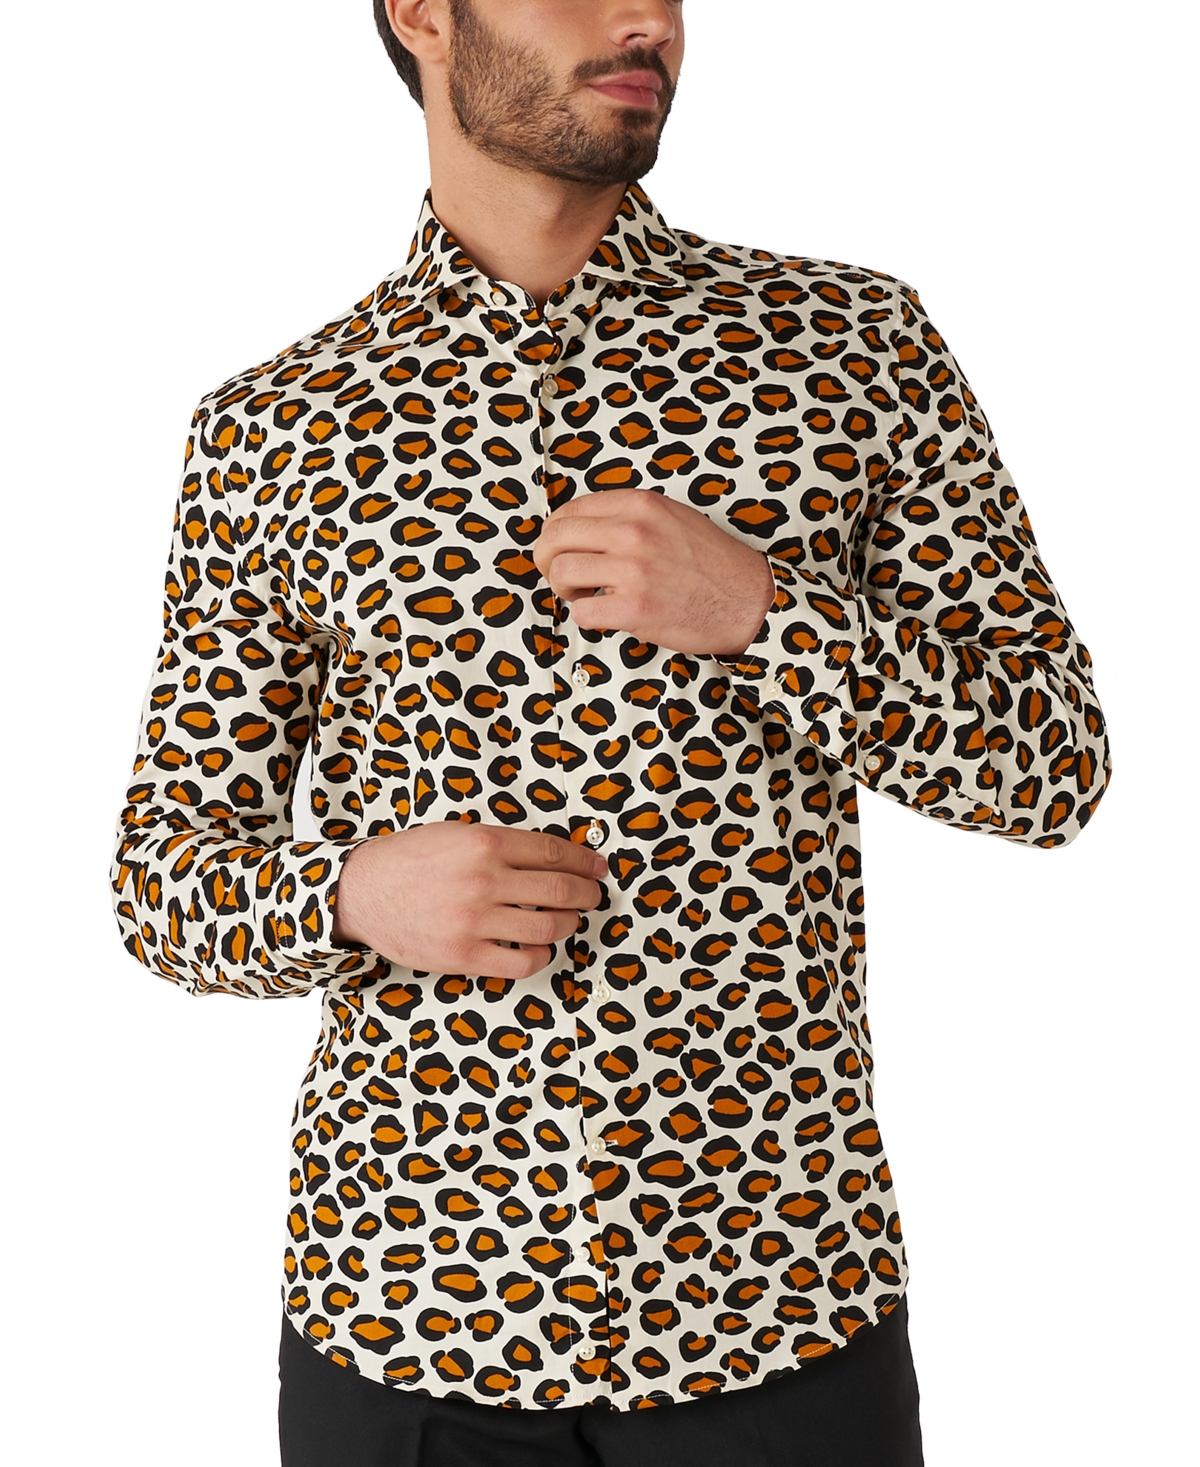 Men's Long-Sleeve Jaguar-Print Shirt - Beige